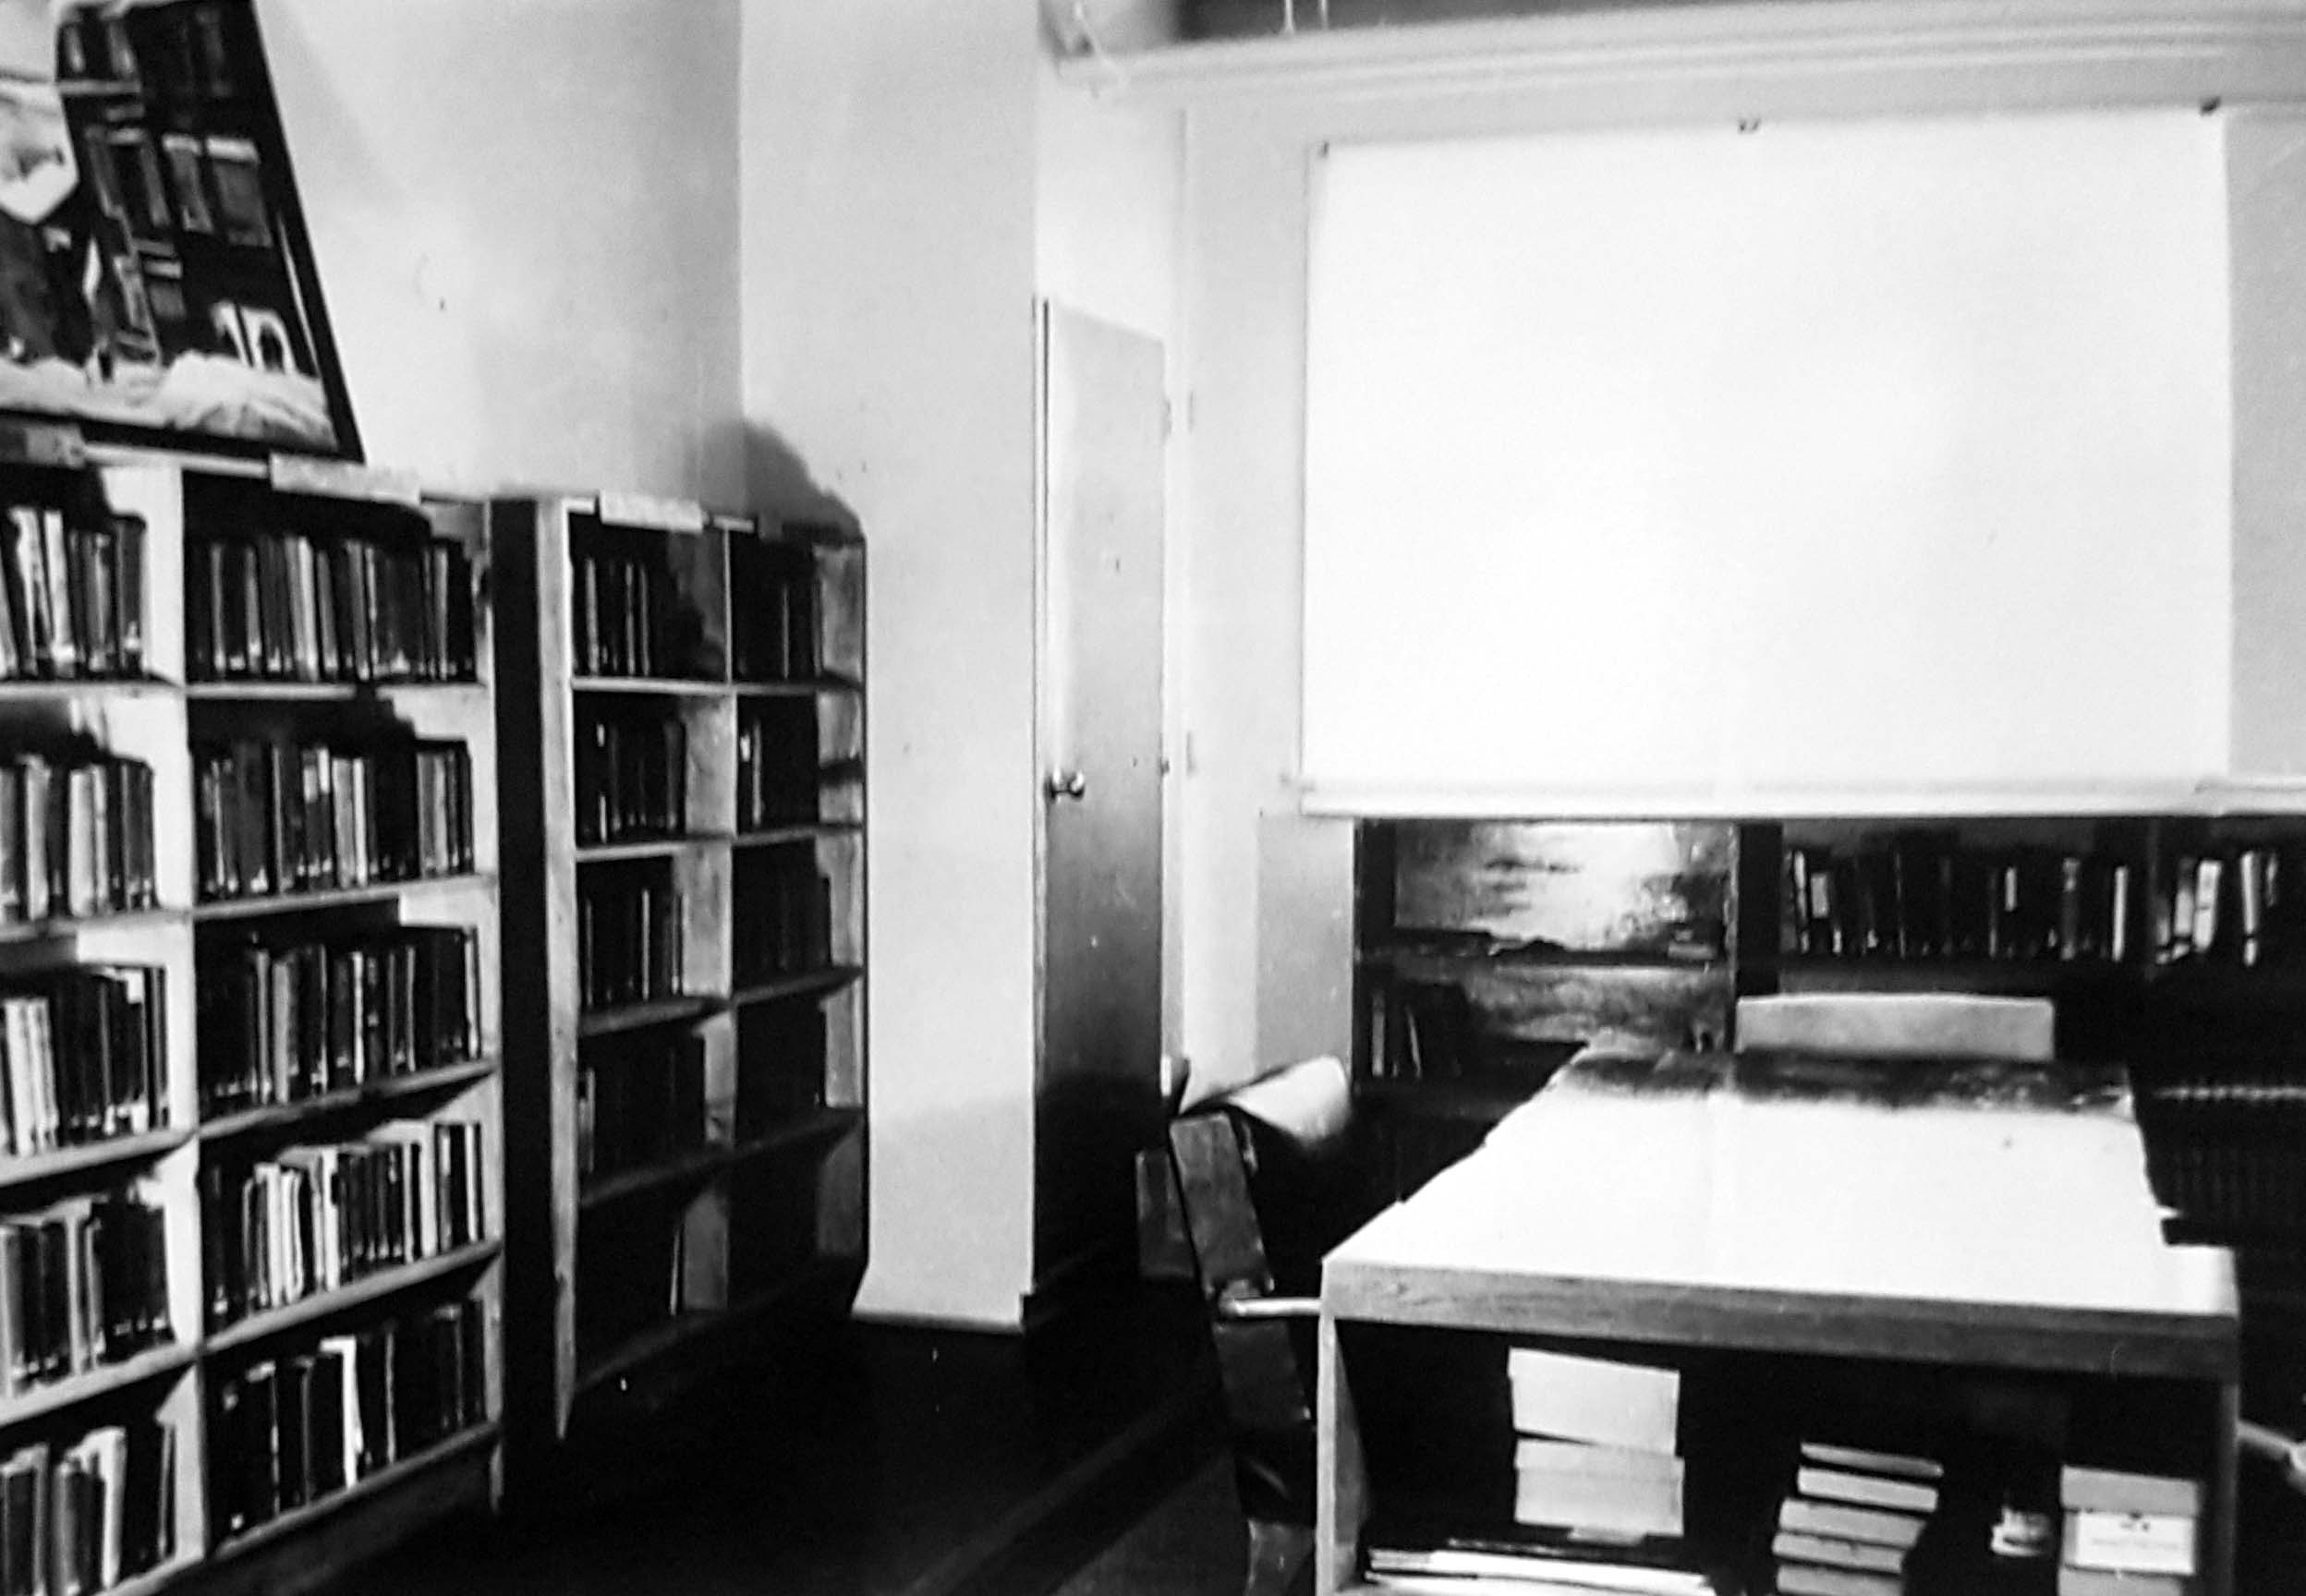 /glo_library_1945.jpg